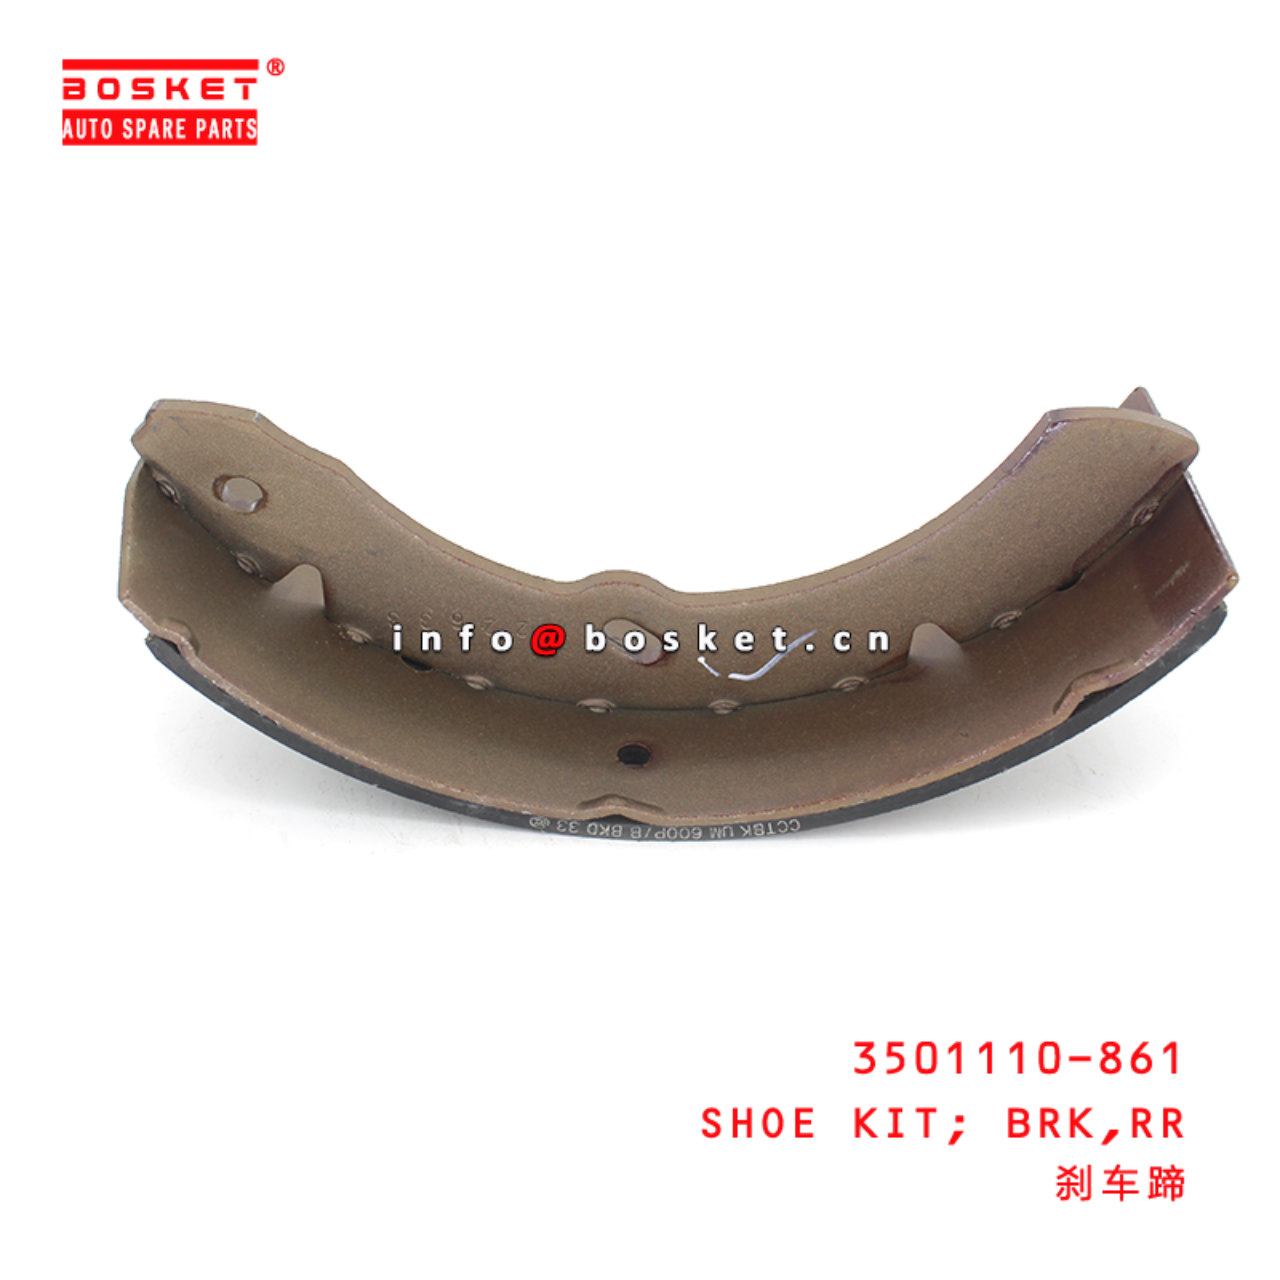 3501110-861 Rear Brake Shoe Kit suitable for ISUZU NKR77 P600 3501110-861